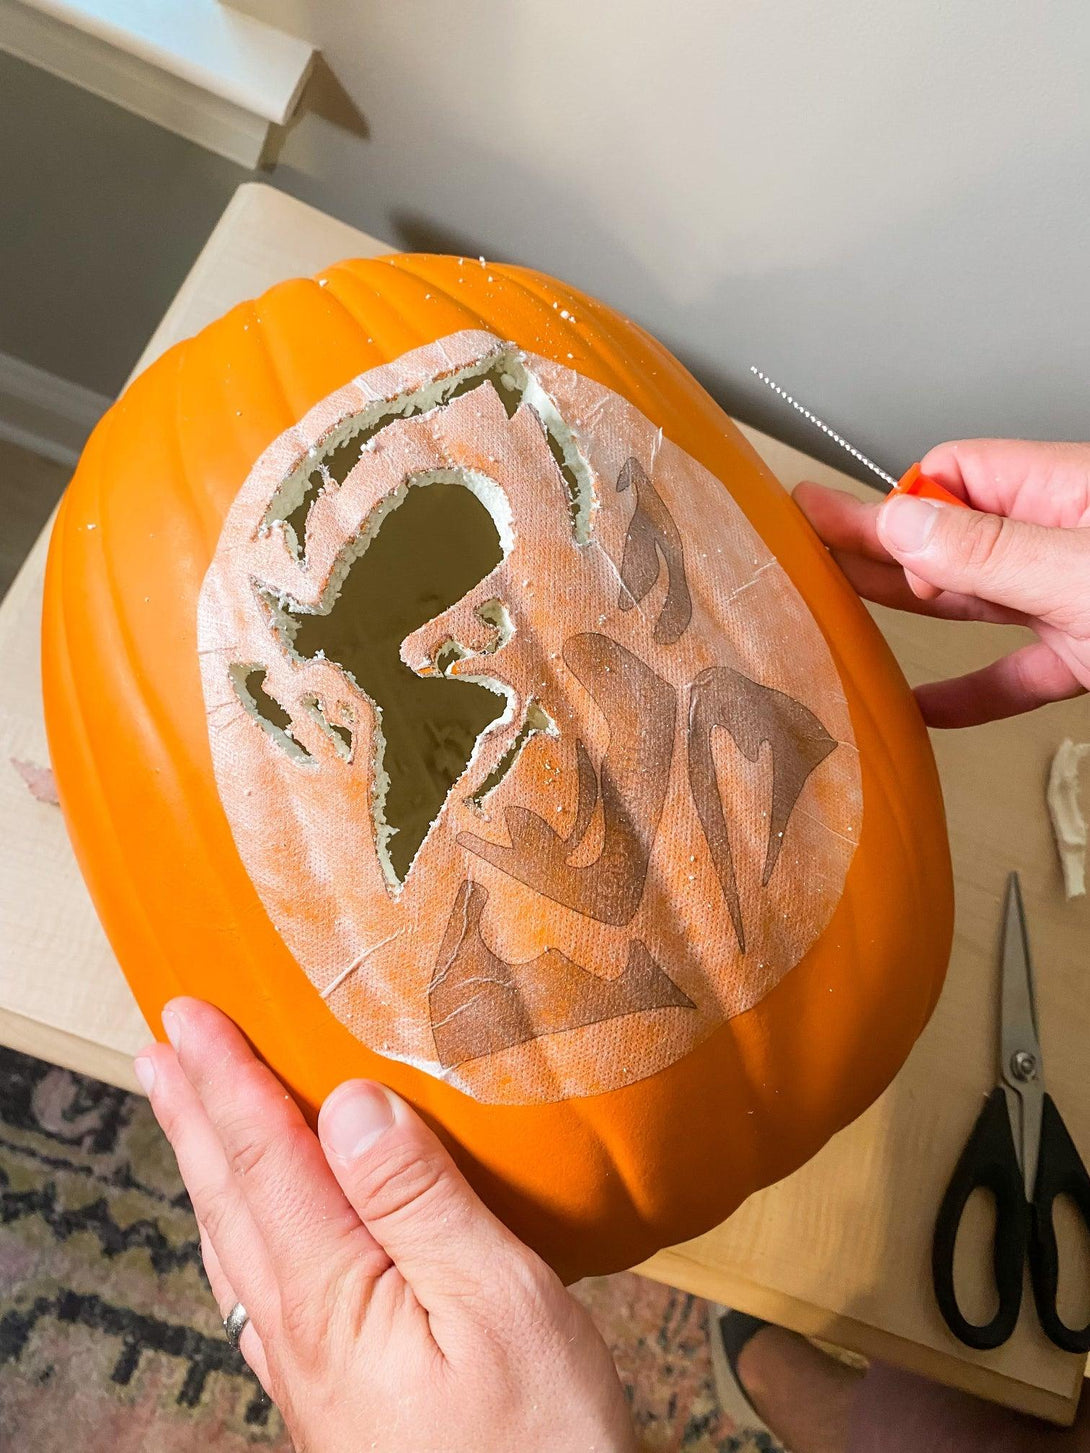 Happy Halloween #1 Pumpkin Carving Stencil - Pumpkin HQ